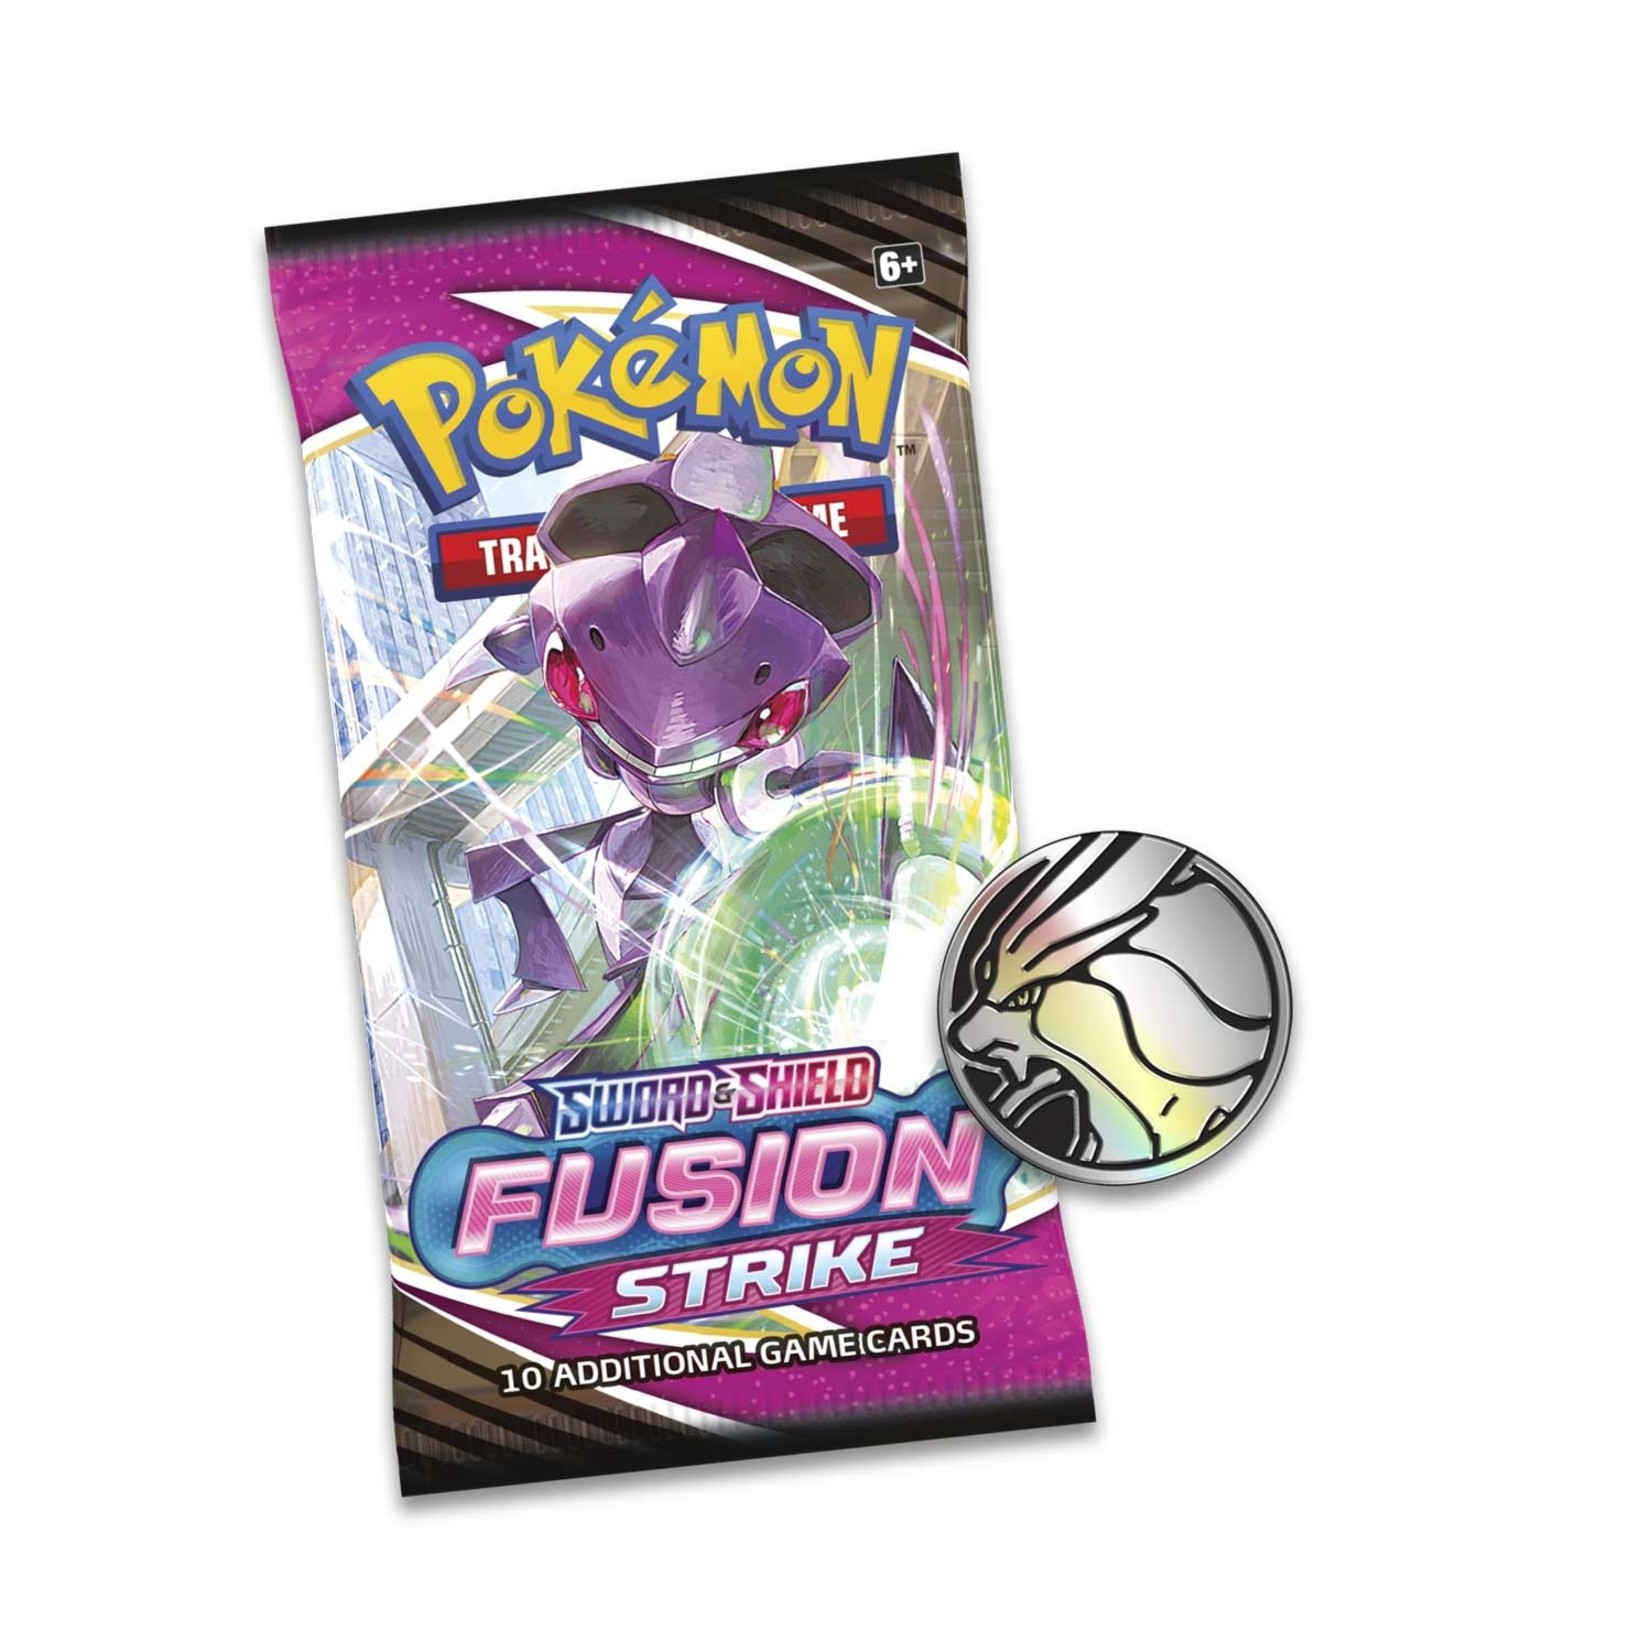 Pokémon Pokemon TCG: Fusion Strike 3 Pack Blister